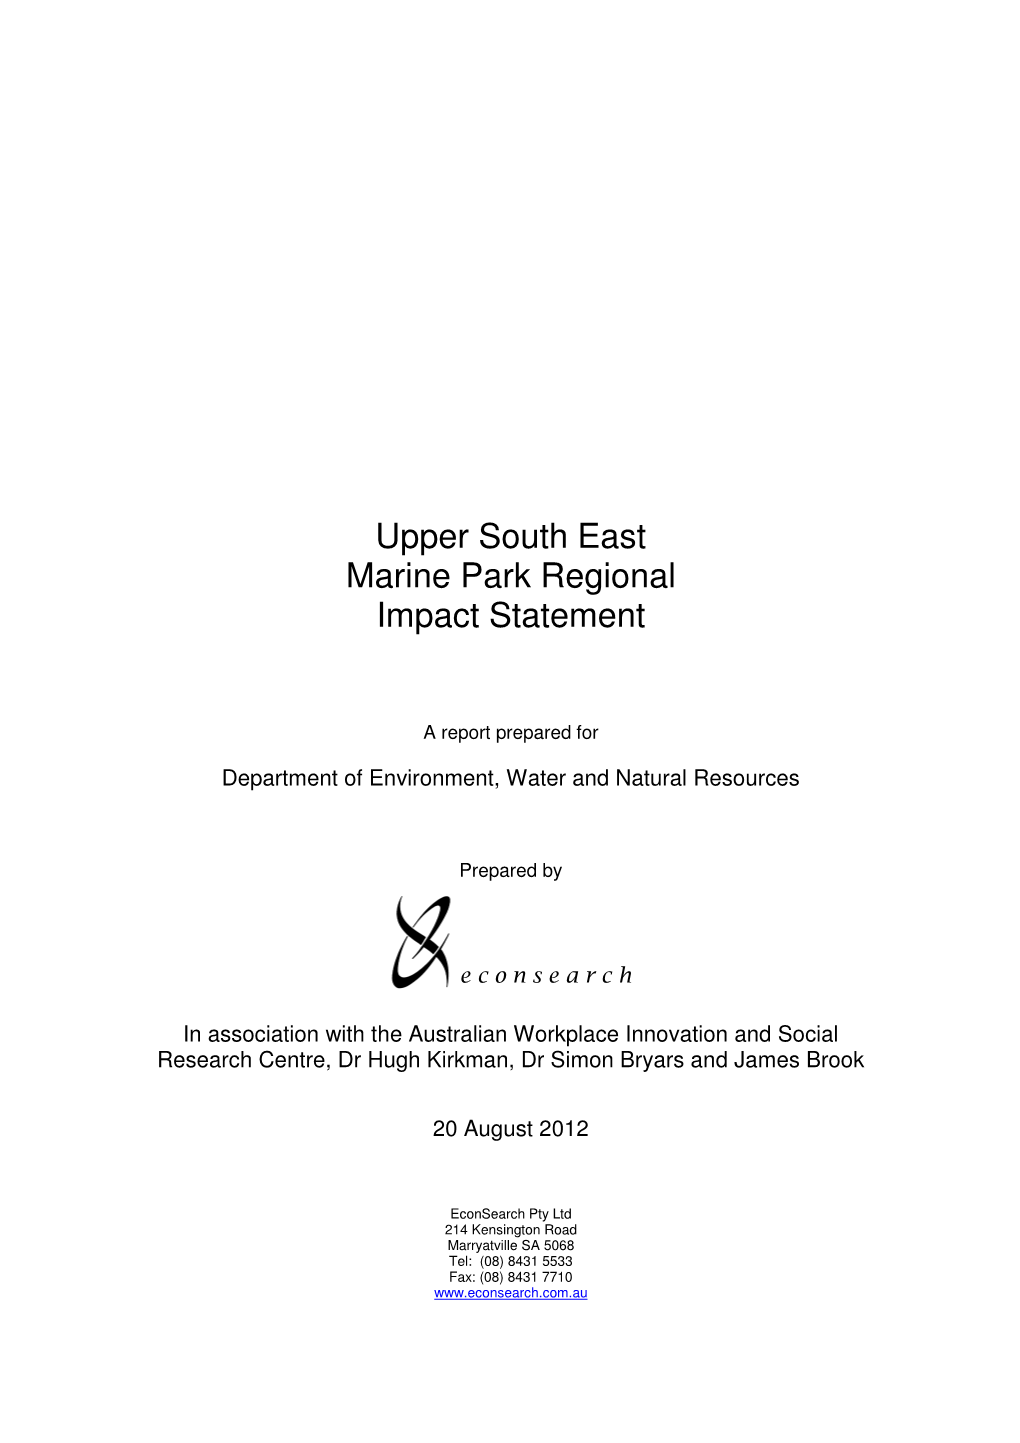 Upper South East Marine Park Regional Impact Statement